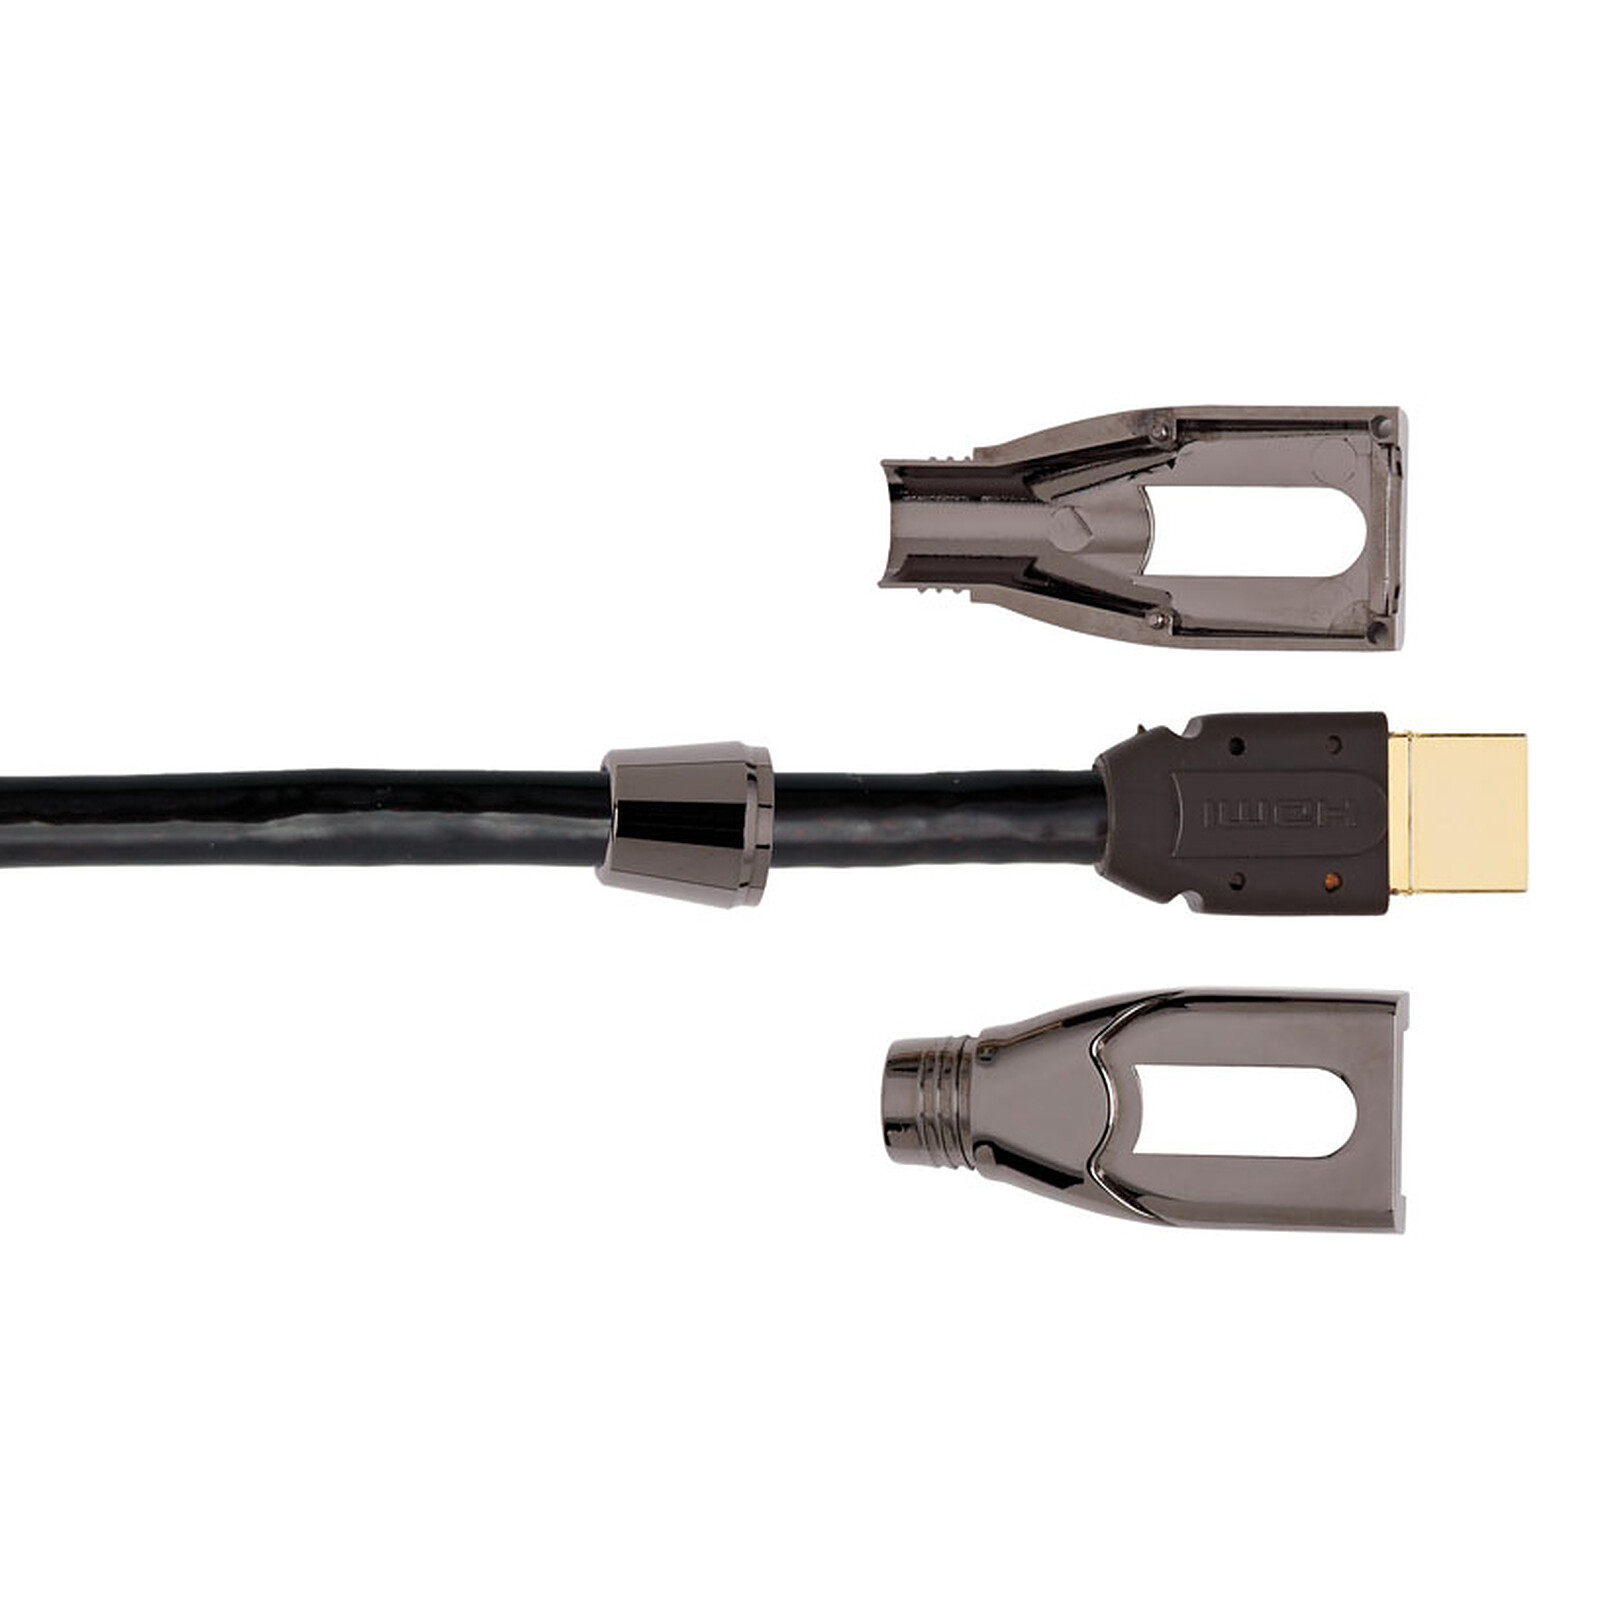 Real Cable HD-OPTIC (10m) - HDMI - Garantie 3 ans LDLC